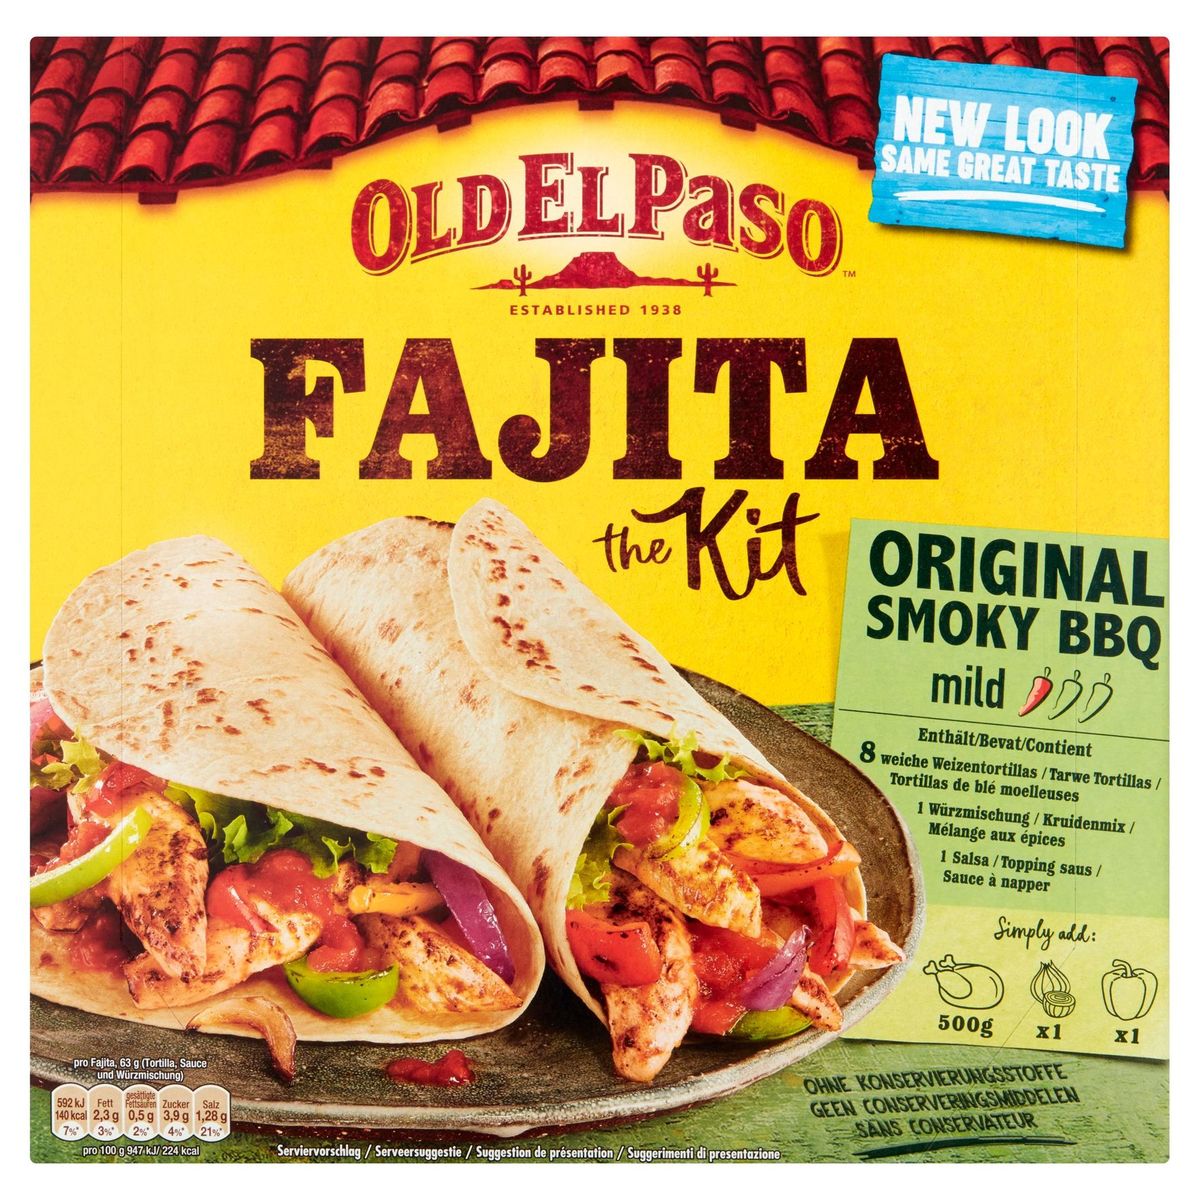 Old El Paso Fajita the Kit Original Smoky BBQ Mild 500 g